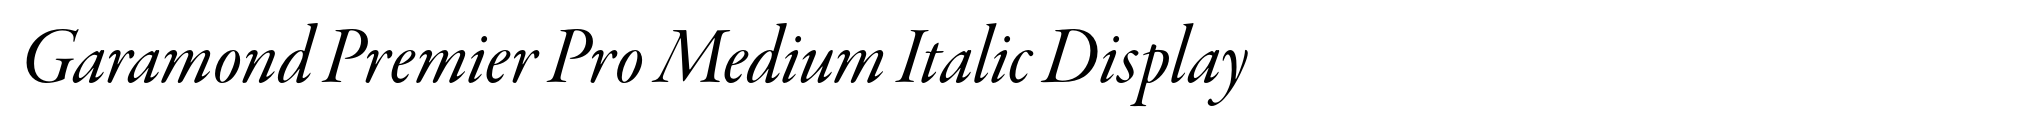 Garamond Premier Pro Medium Italic Display image